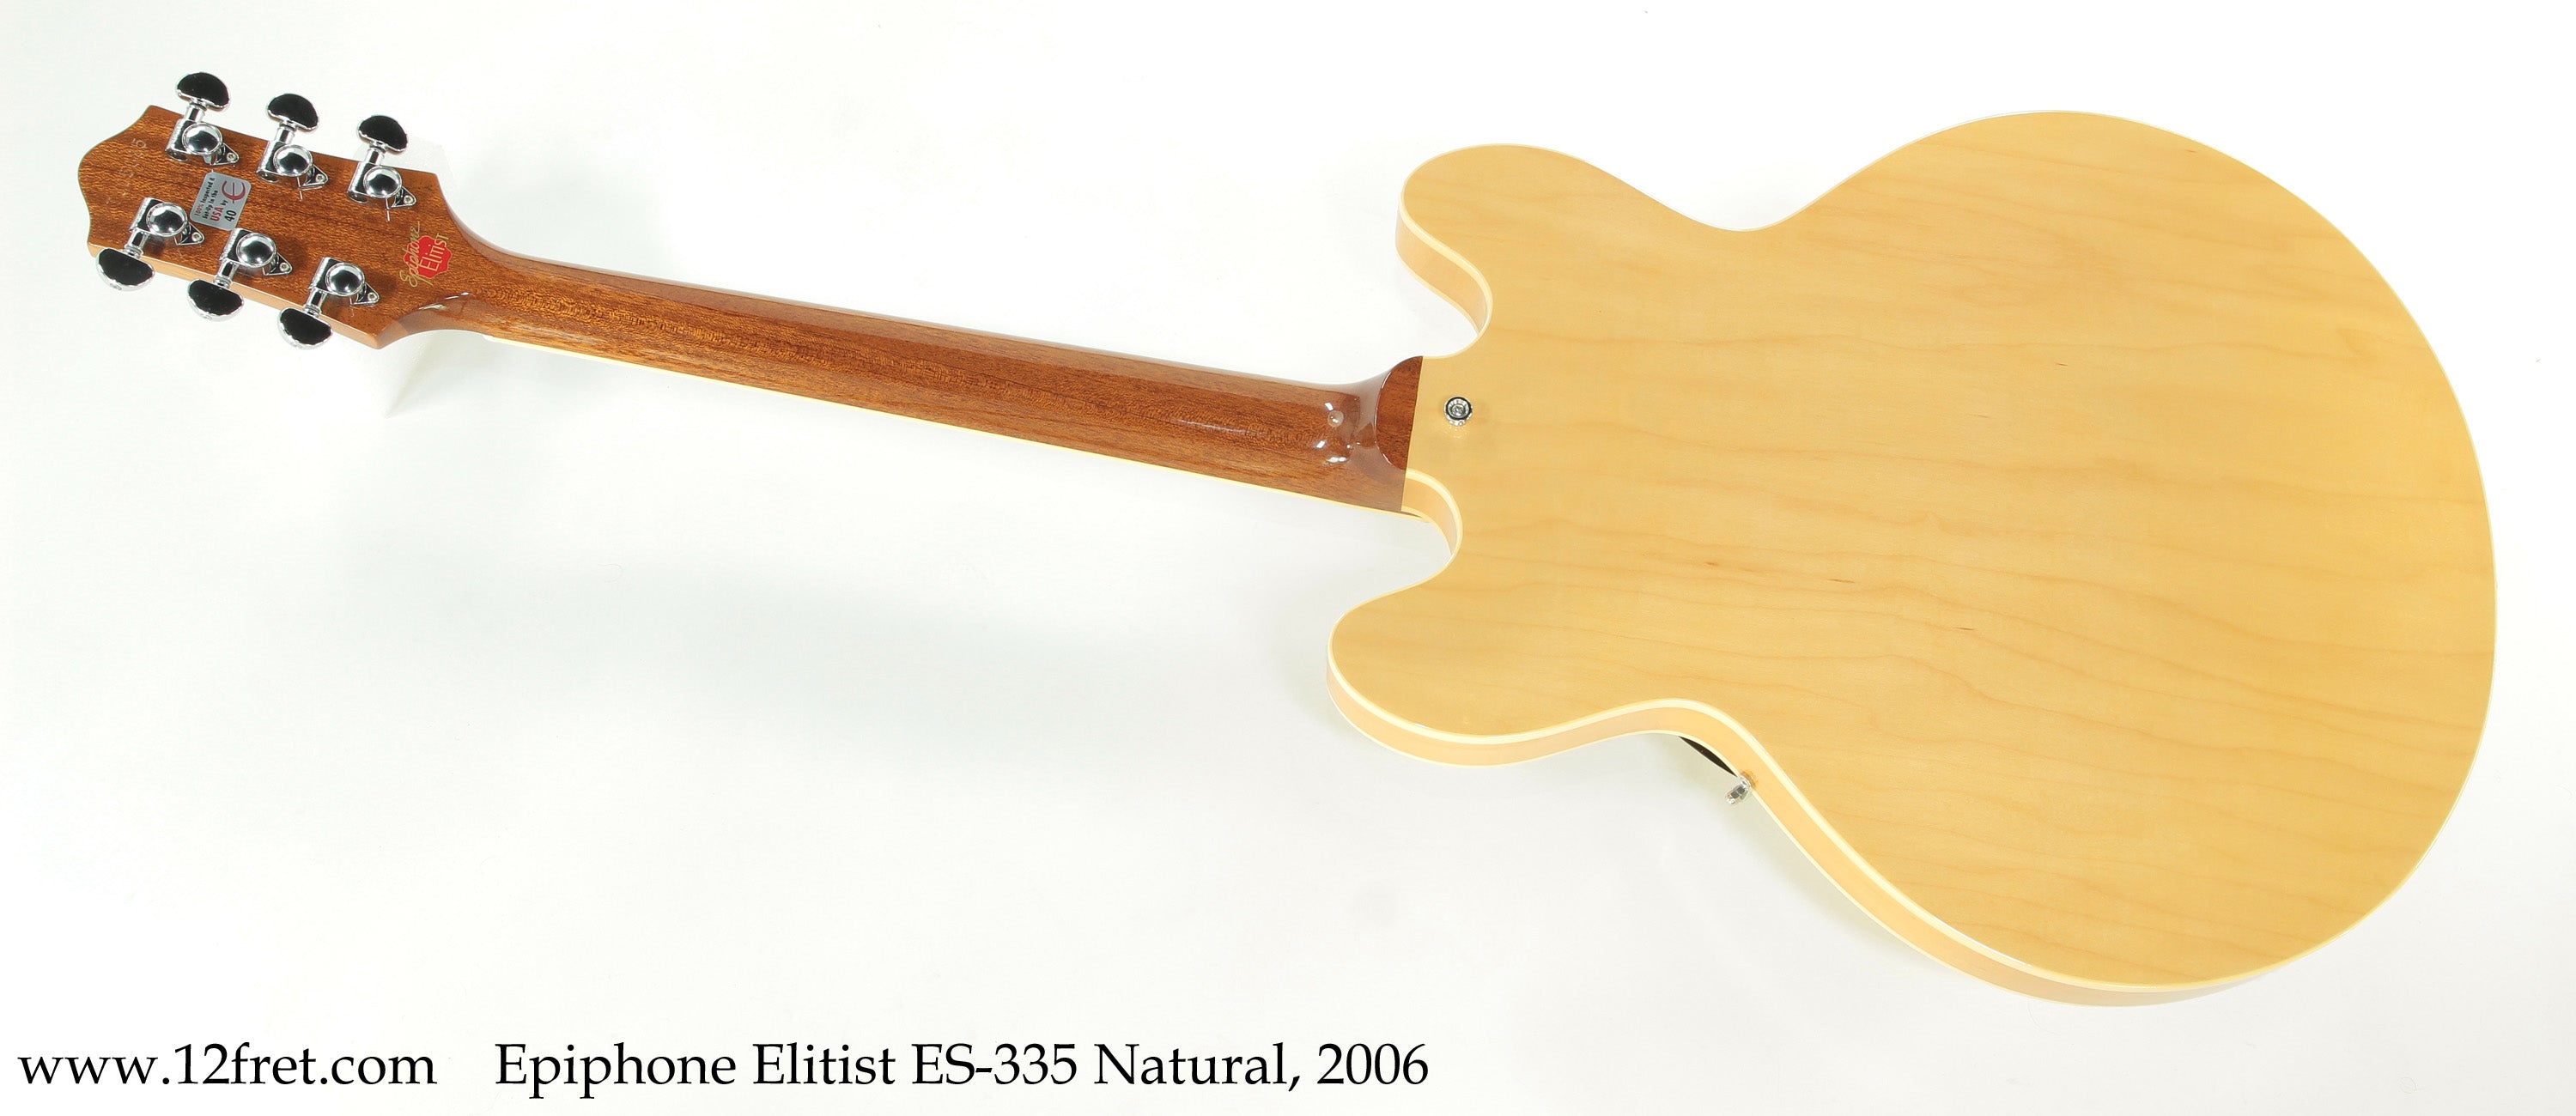 Epiphone Elitist ES-335 Natural, 2006